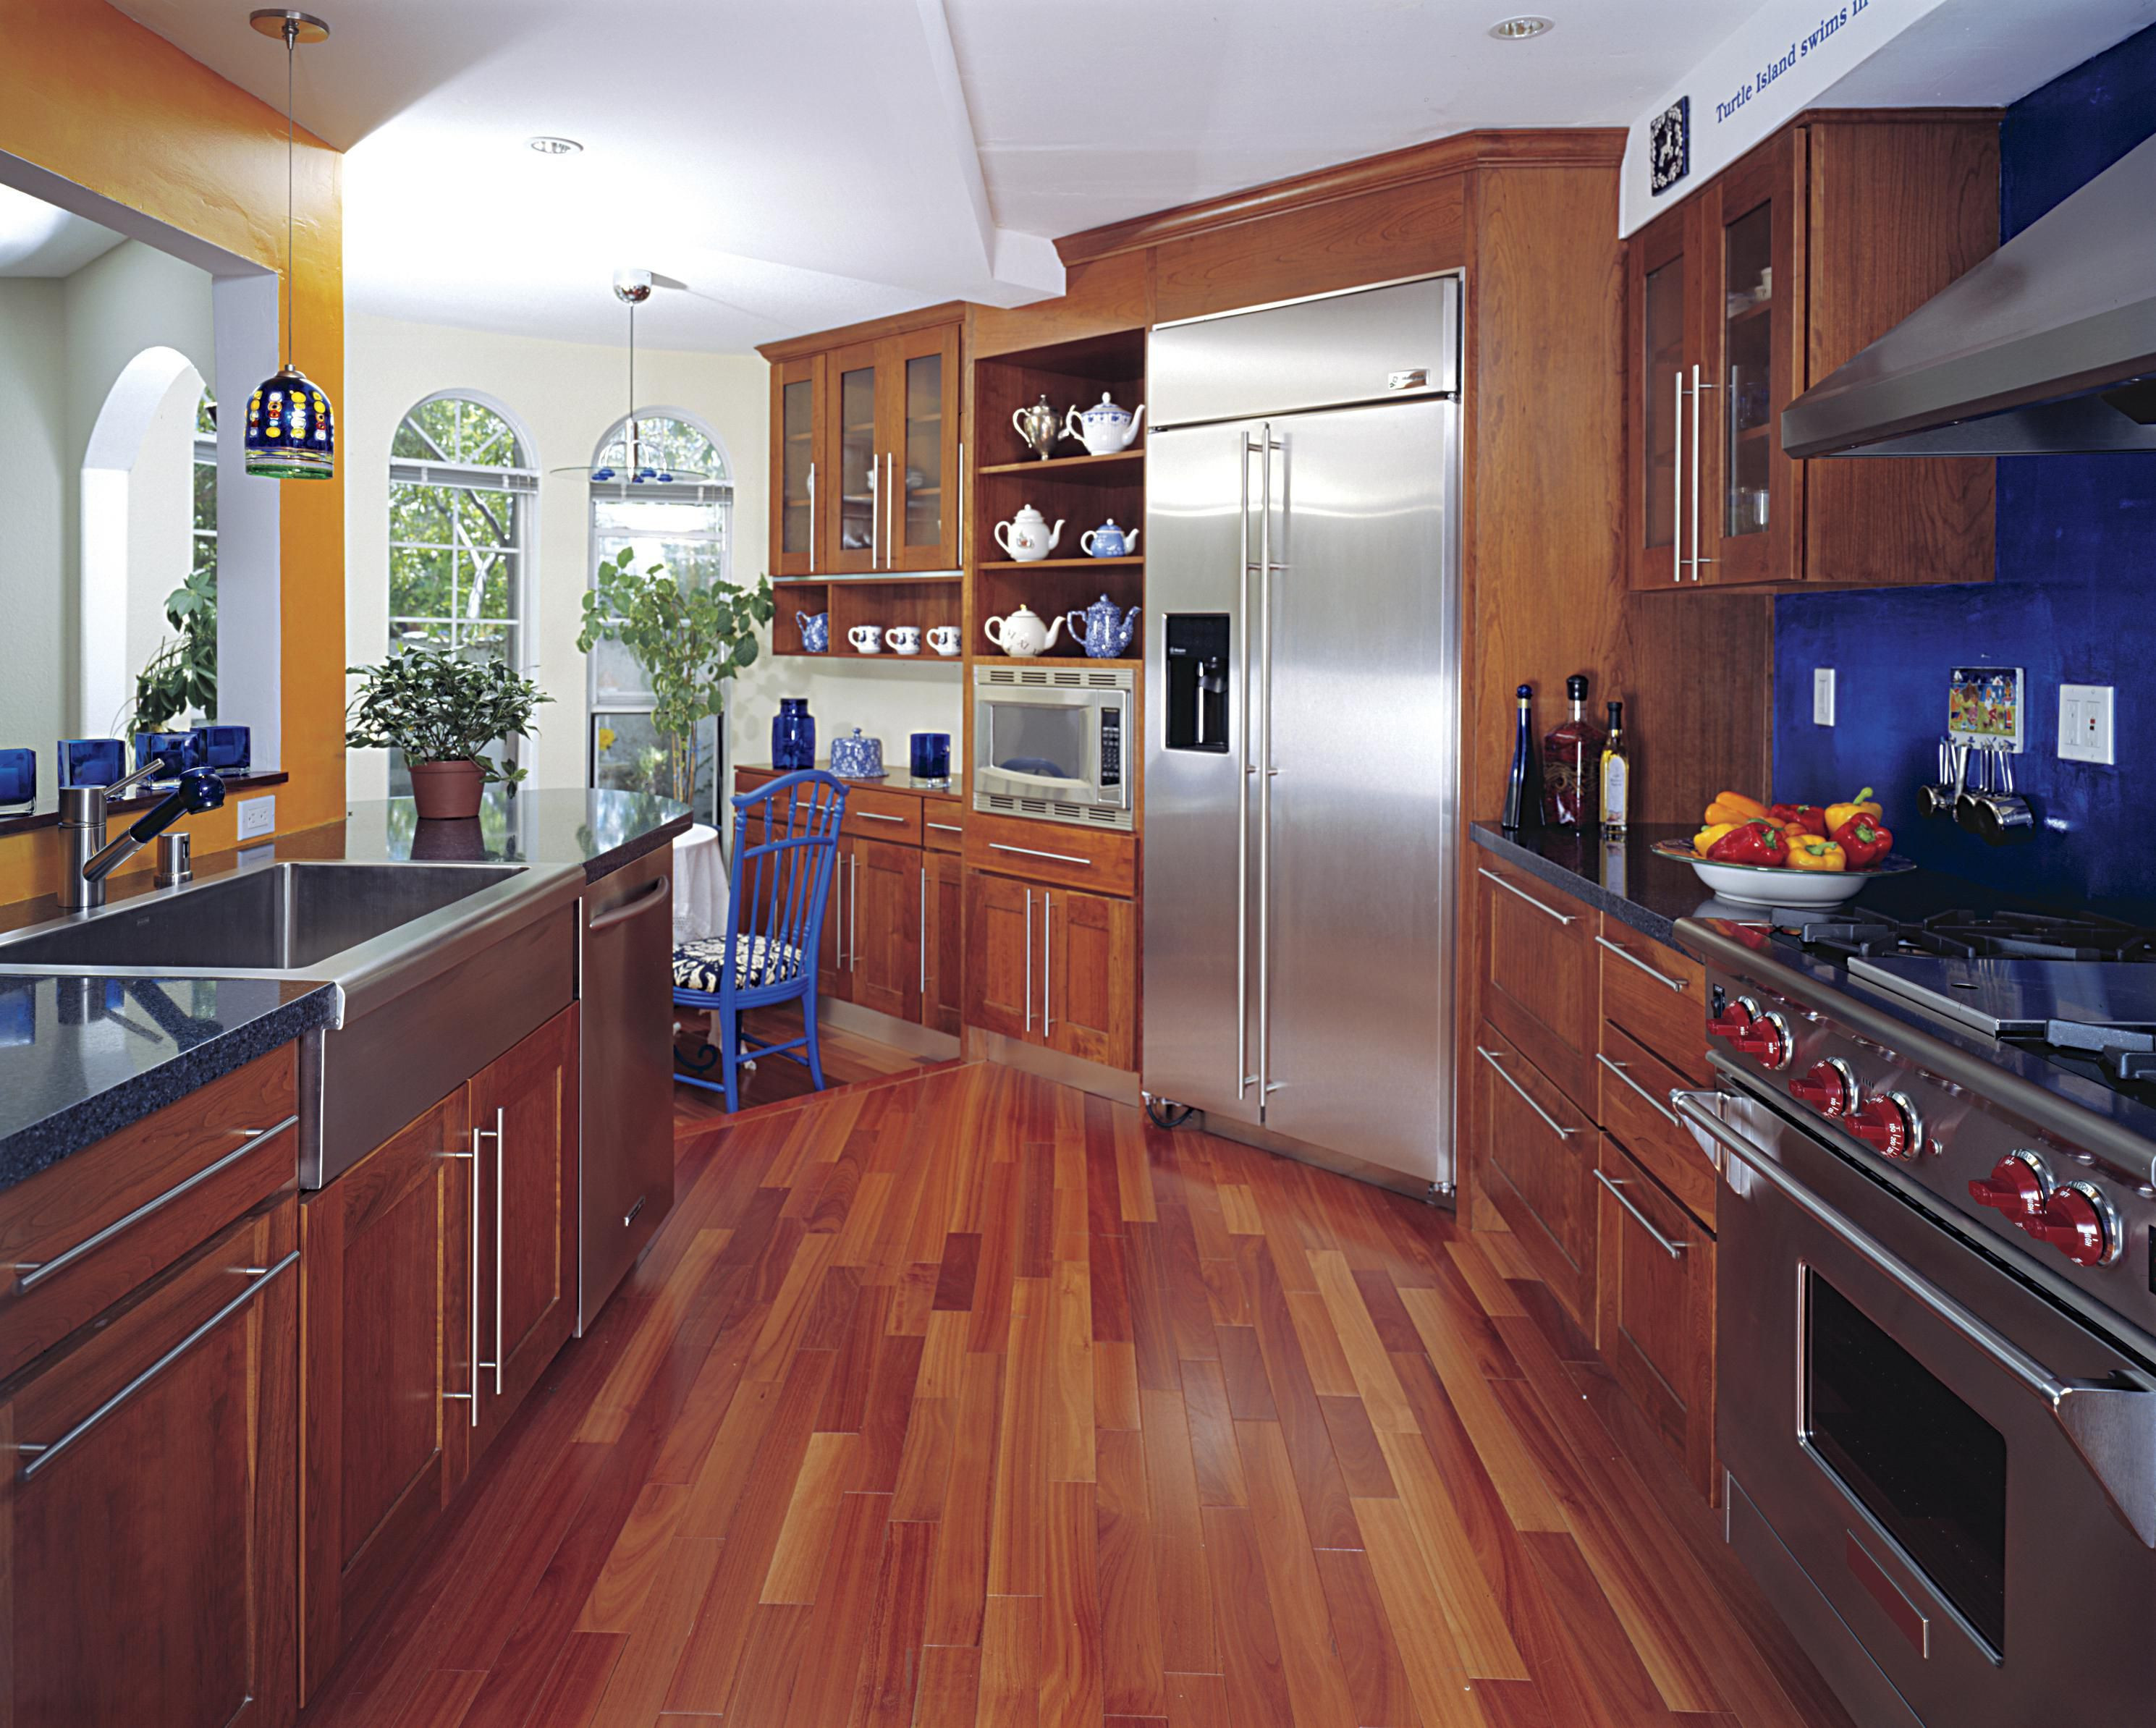 light hardwood floor in kitchen with white cabinet